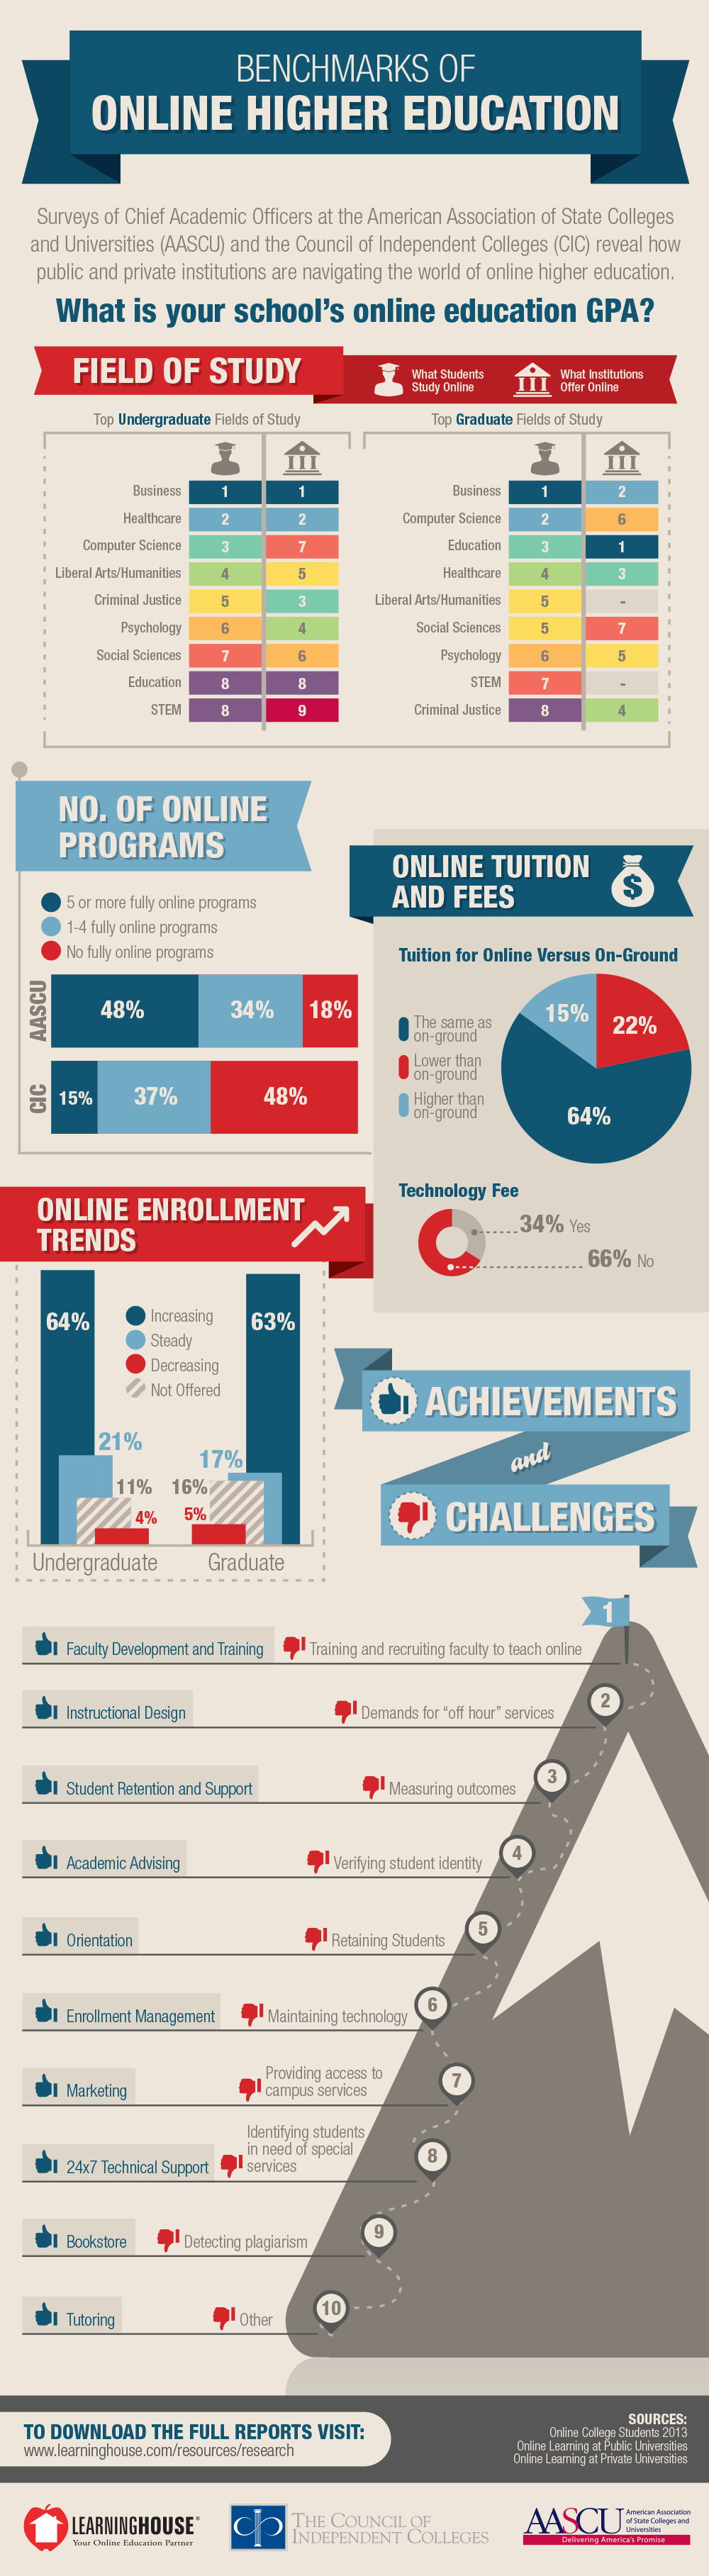 Benchmark of Online Higher Education